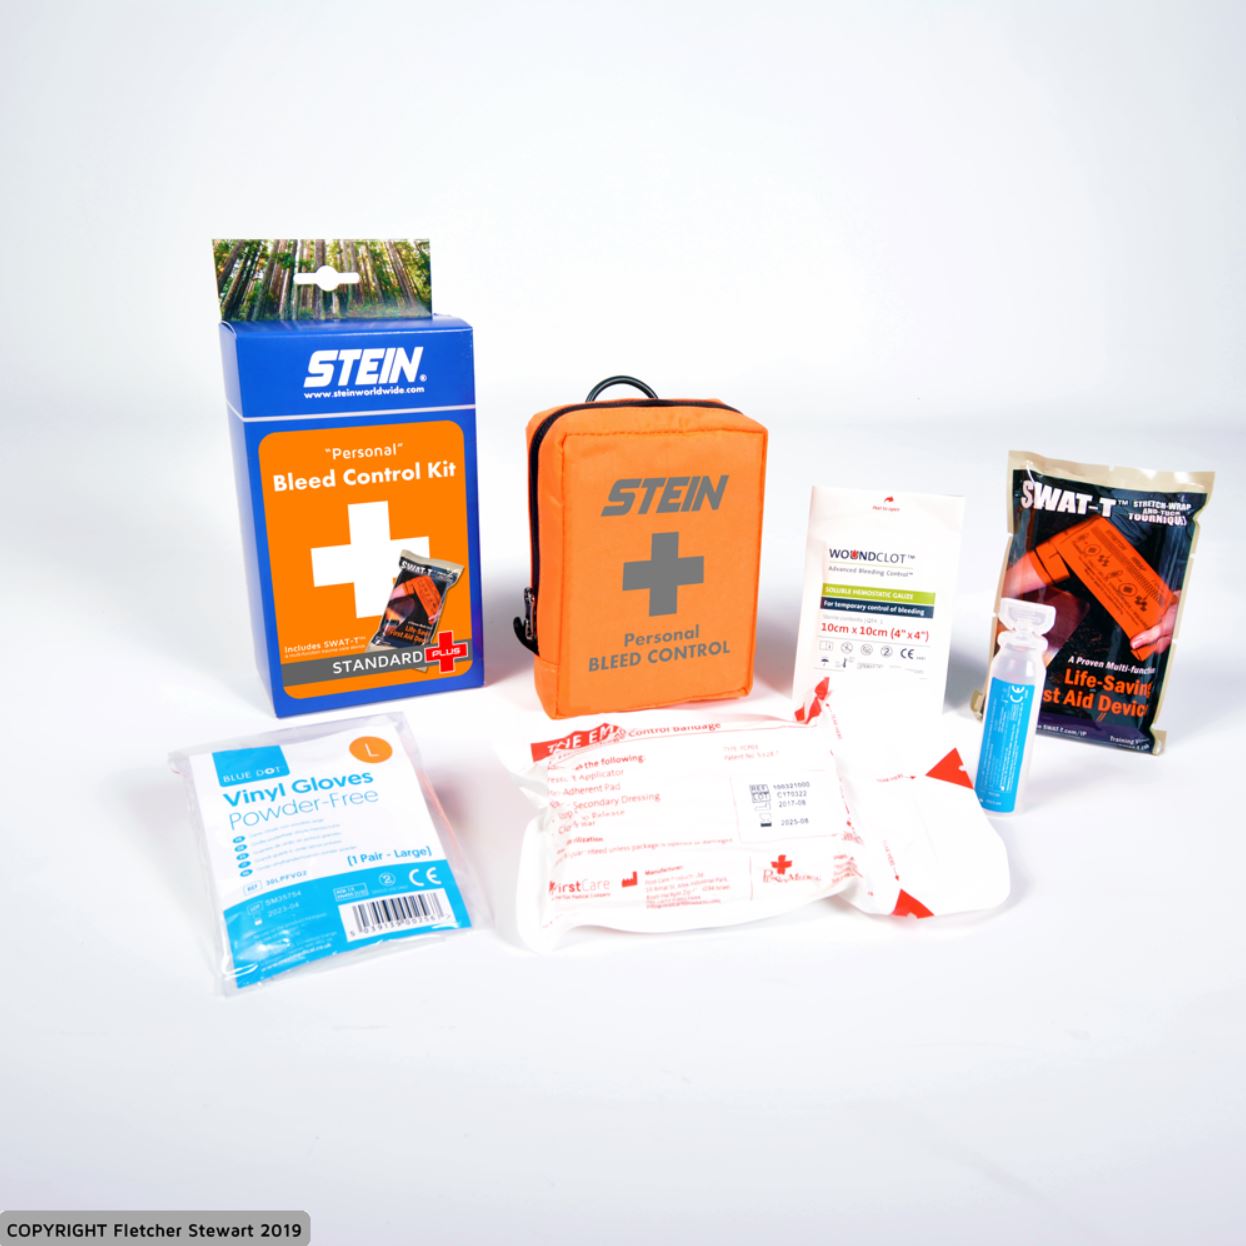 Stein Personal “Bleed Control Kit” (Standard Plus)